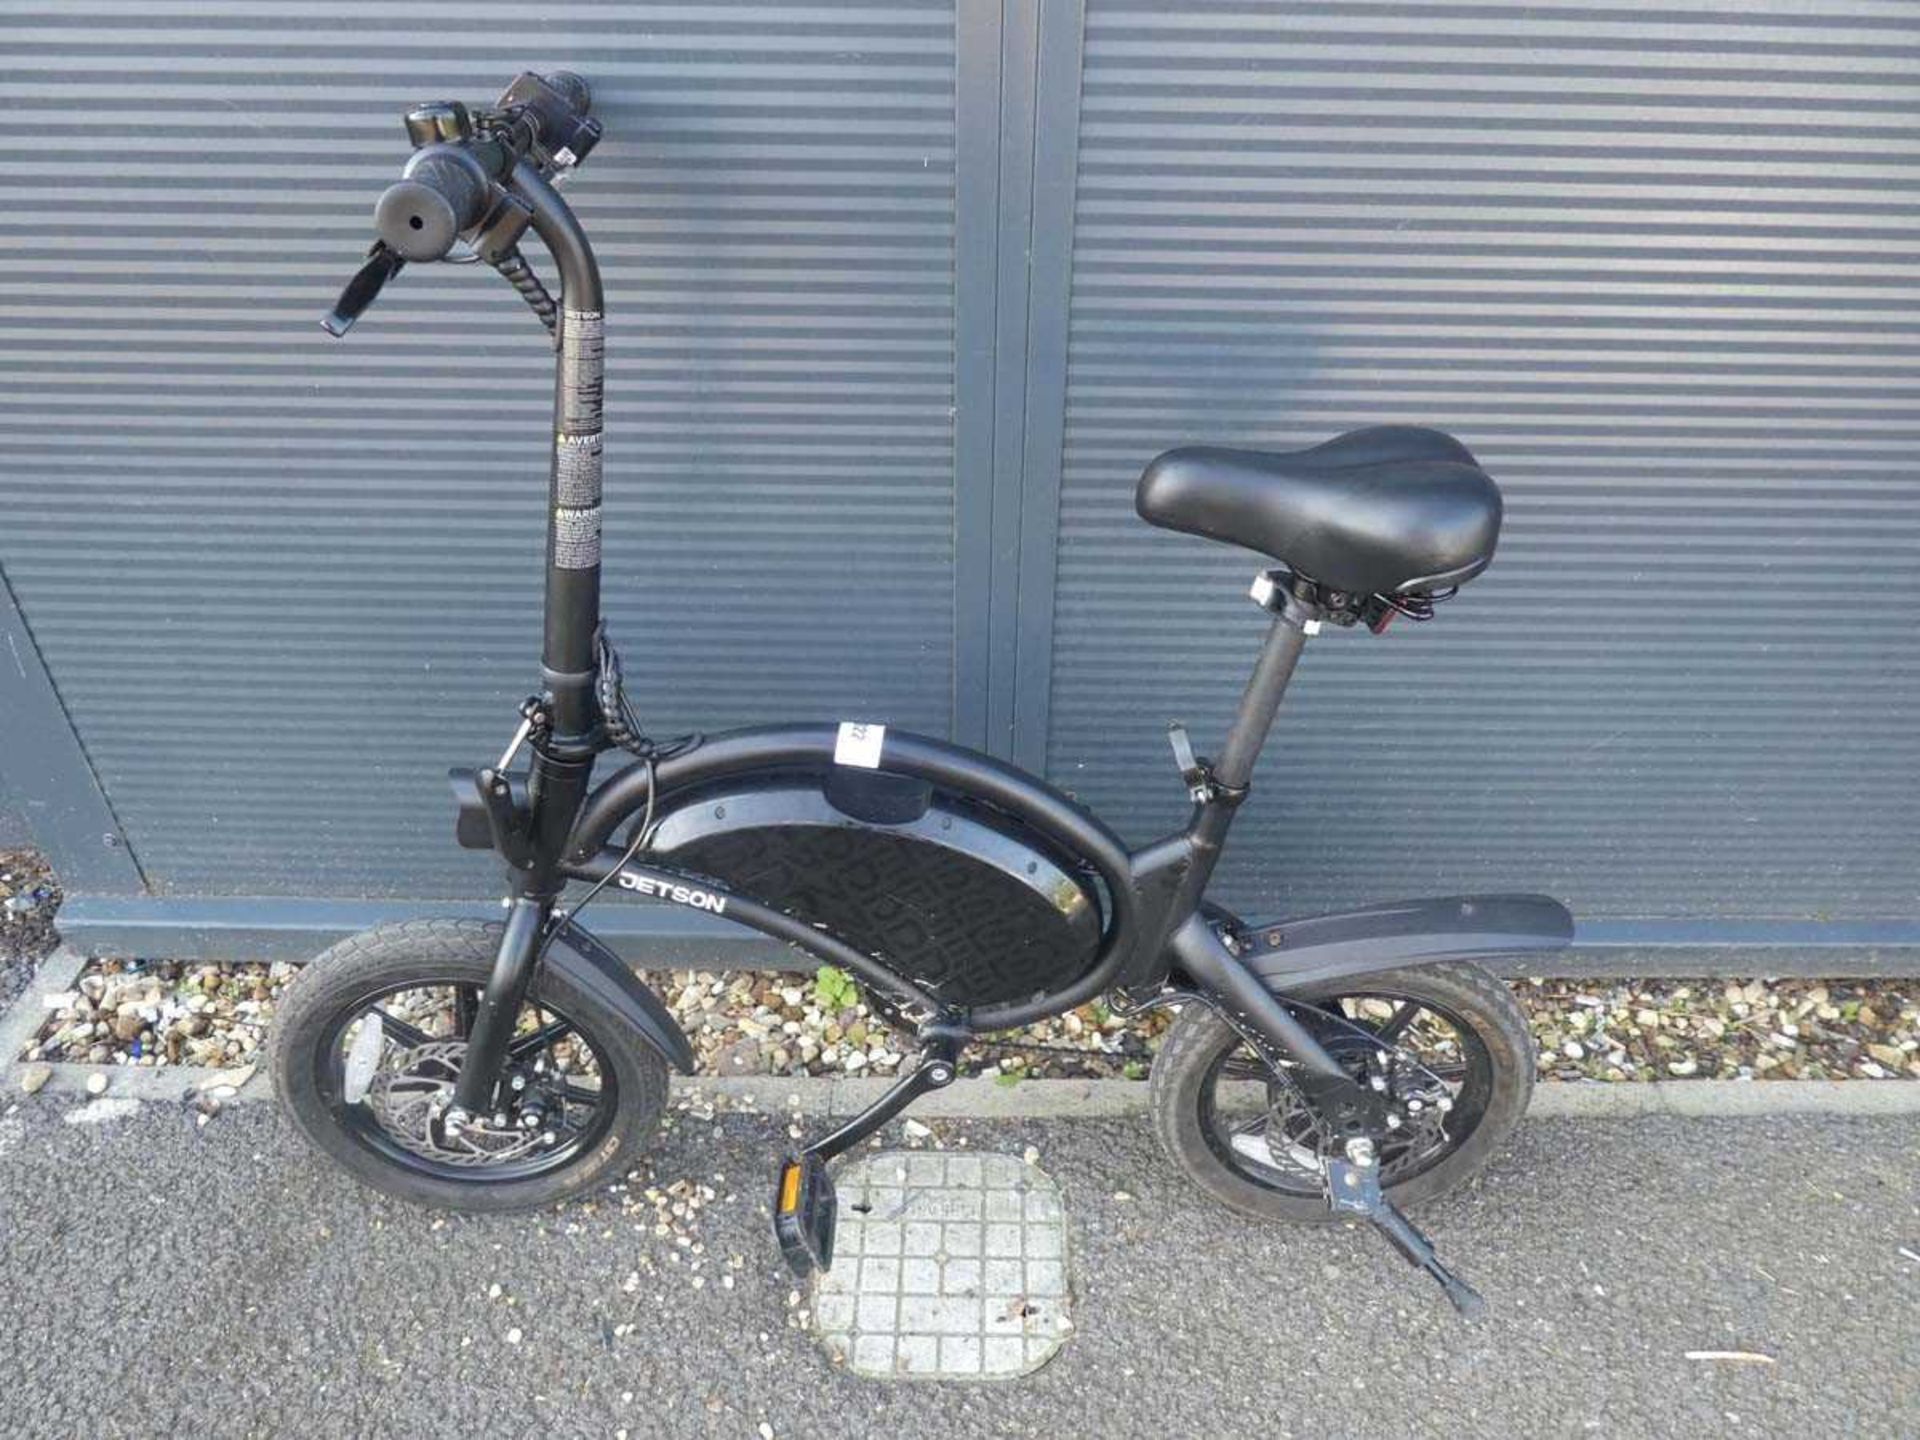 +VAT Jetson Bolt Pro electric scooter, unboxed